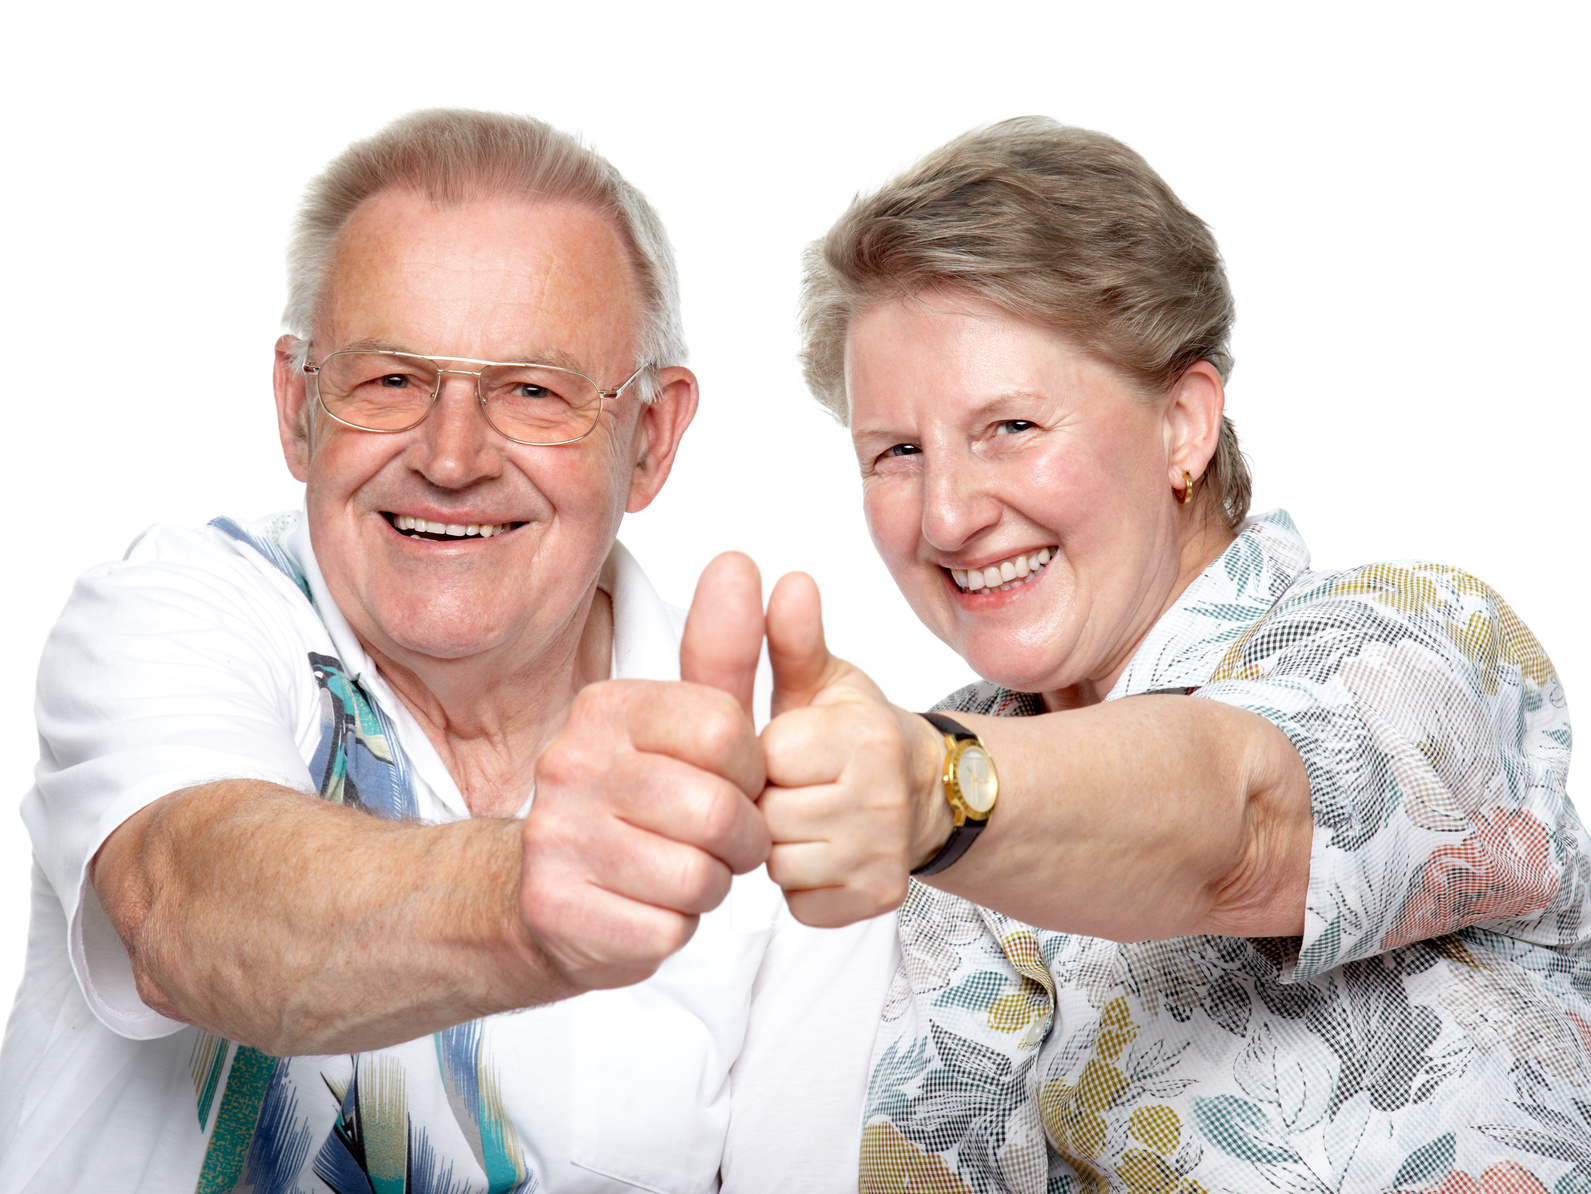 Closeup portrait of a smiling elderly couple showing thumps